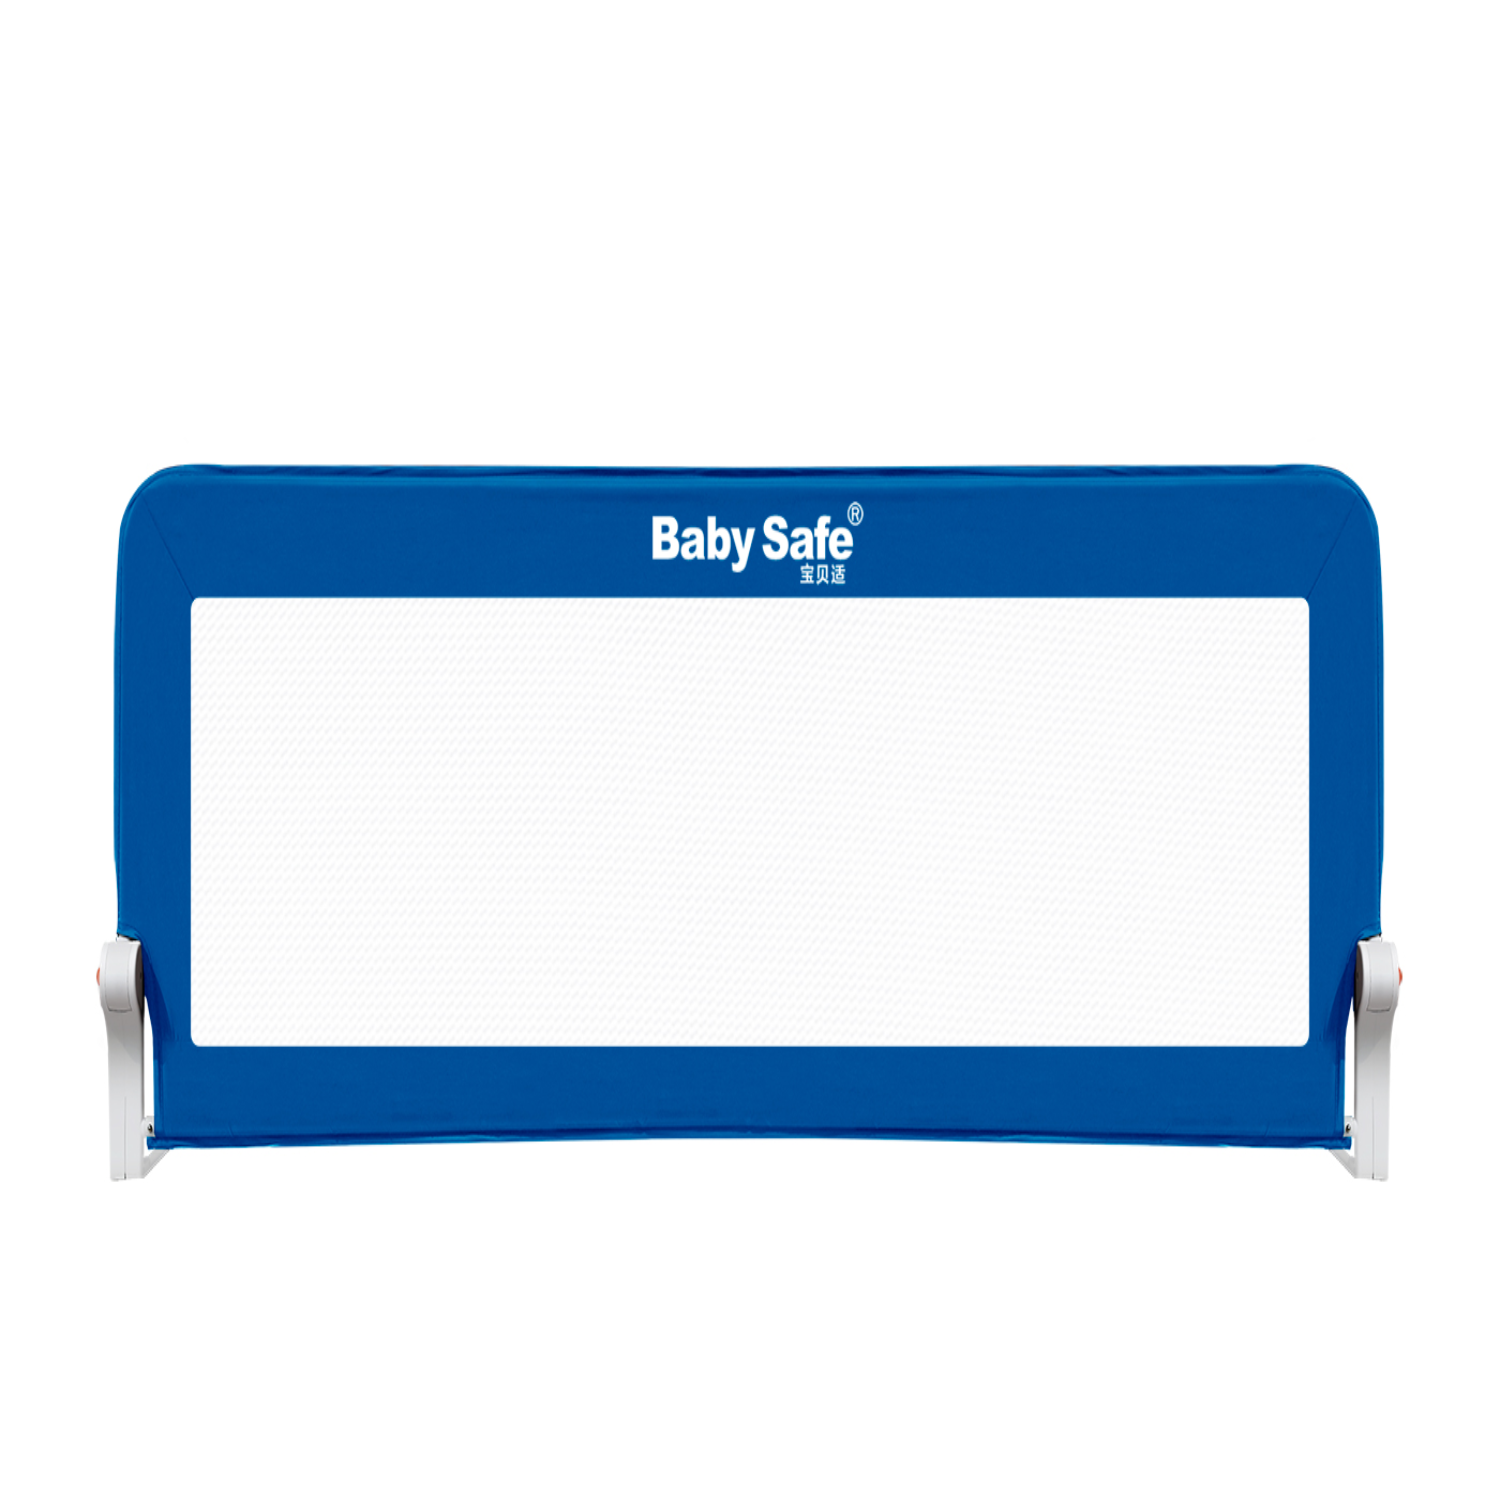 Барьер защитный для кровати Baby Safe 180х42 синий - фото 2